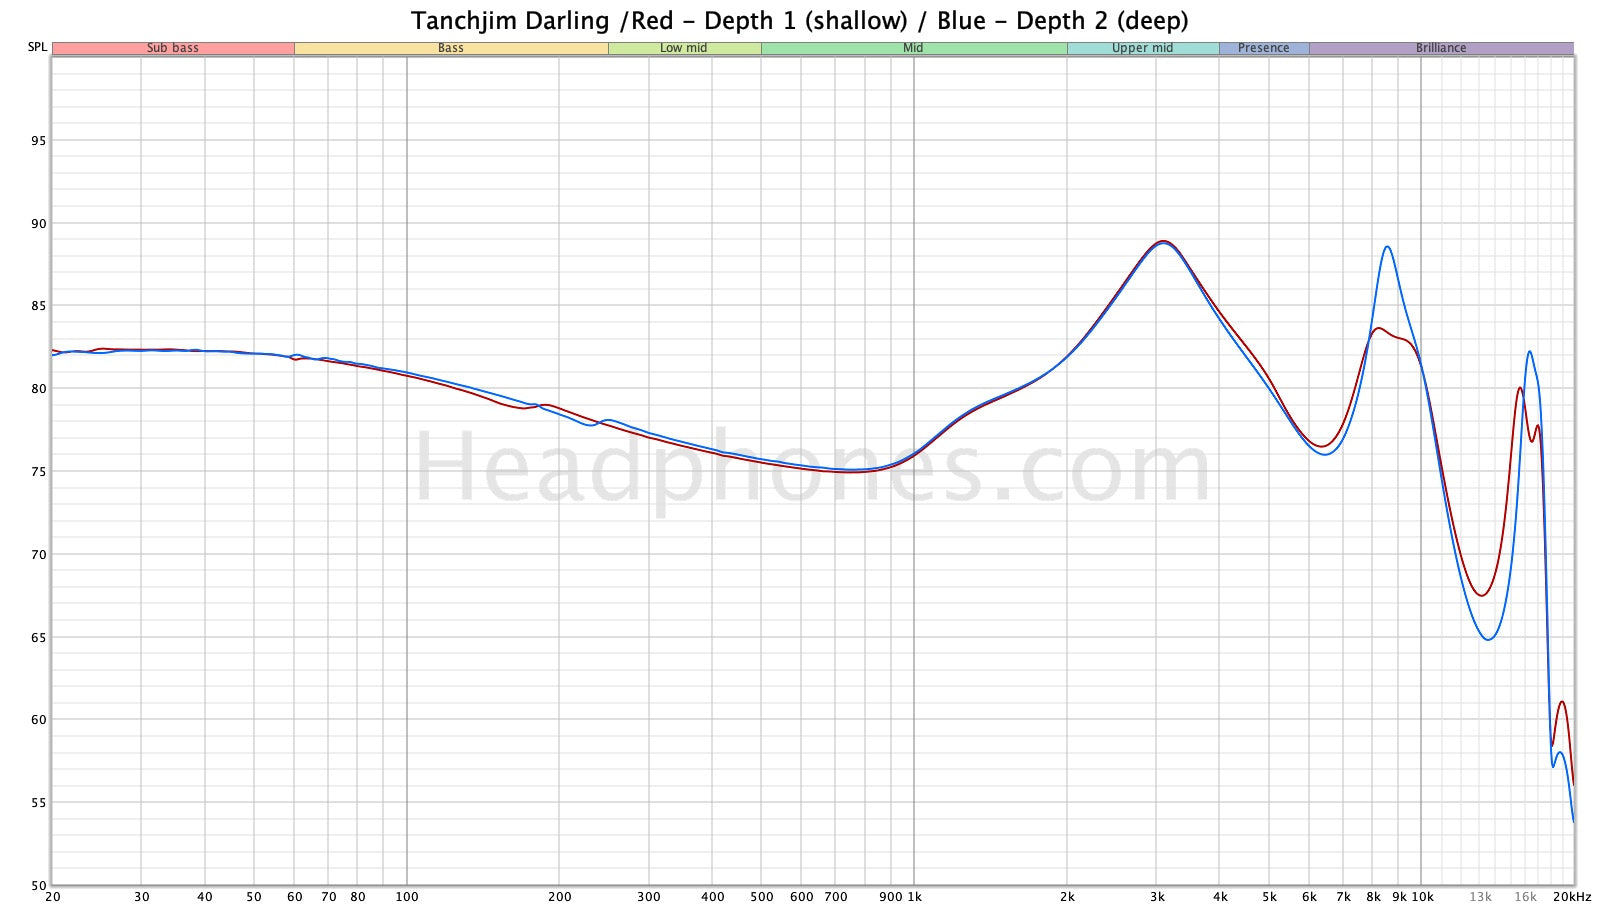 Tanchjim Darling frequency response | Headphones.com